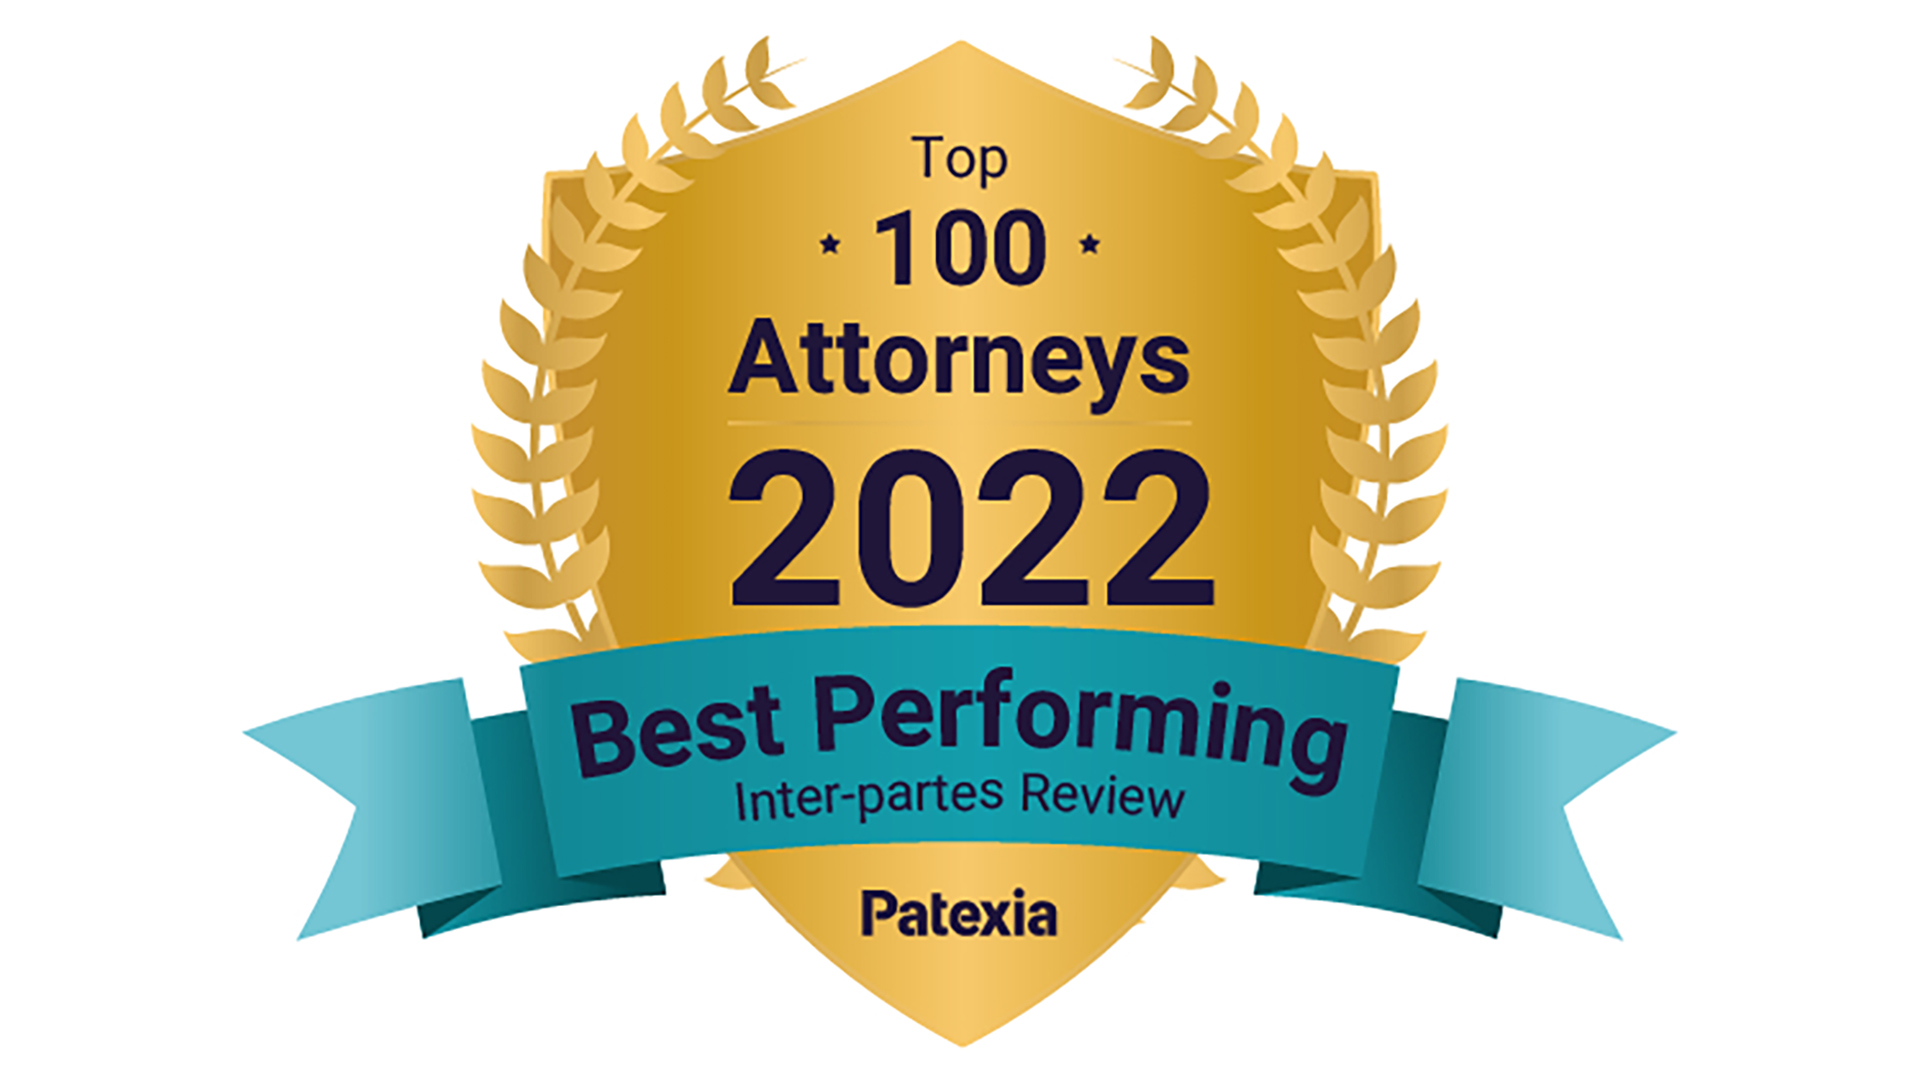 Top 100 Attorneys: 2022 Best Performing